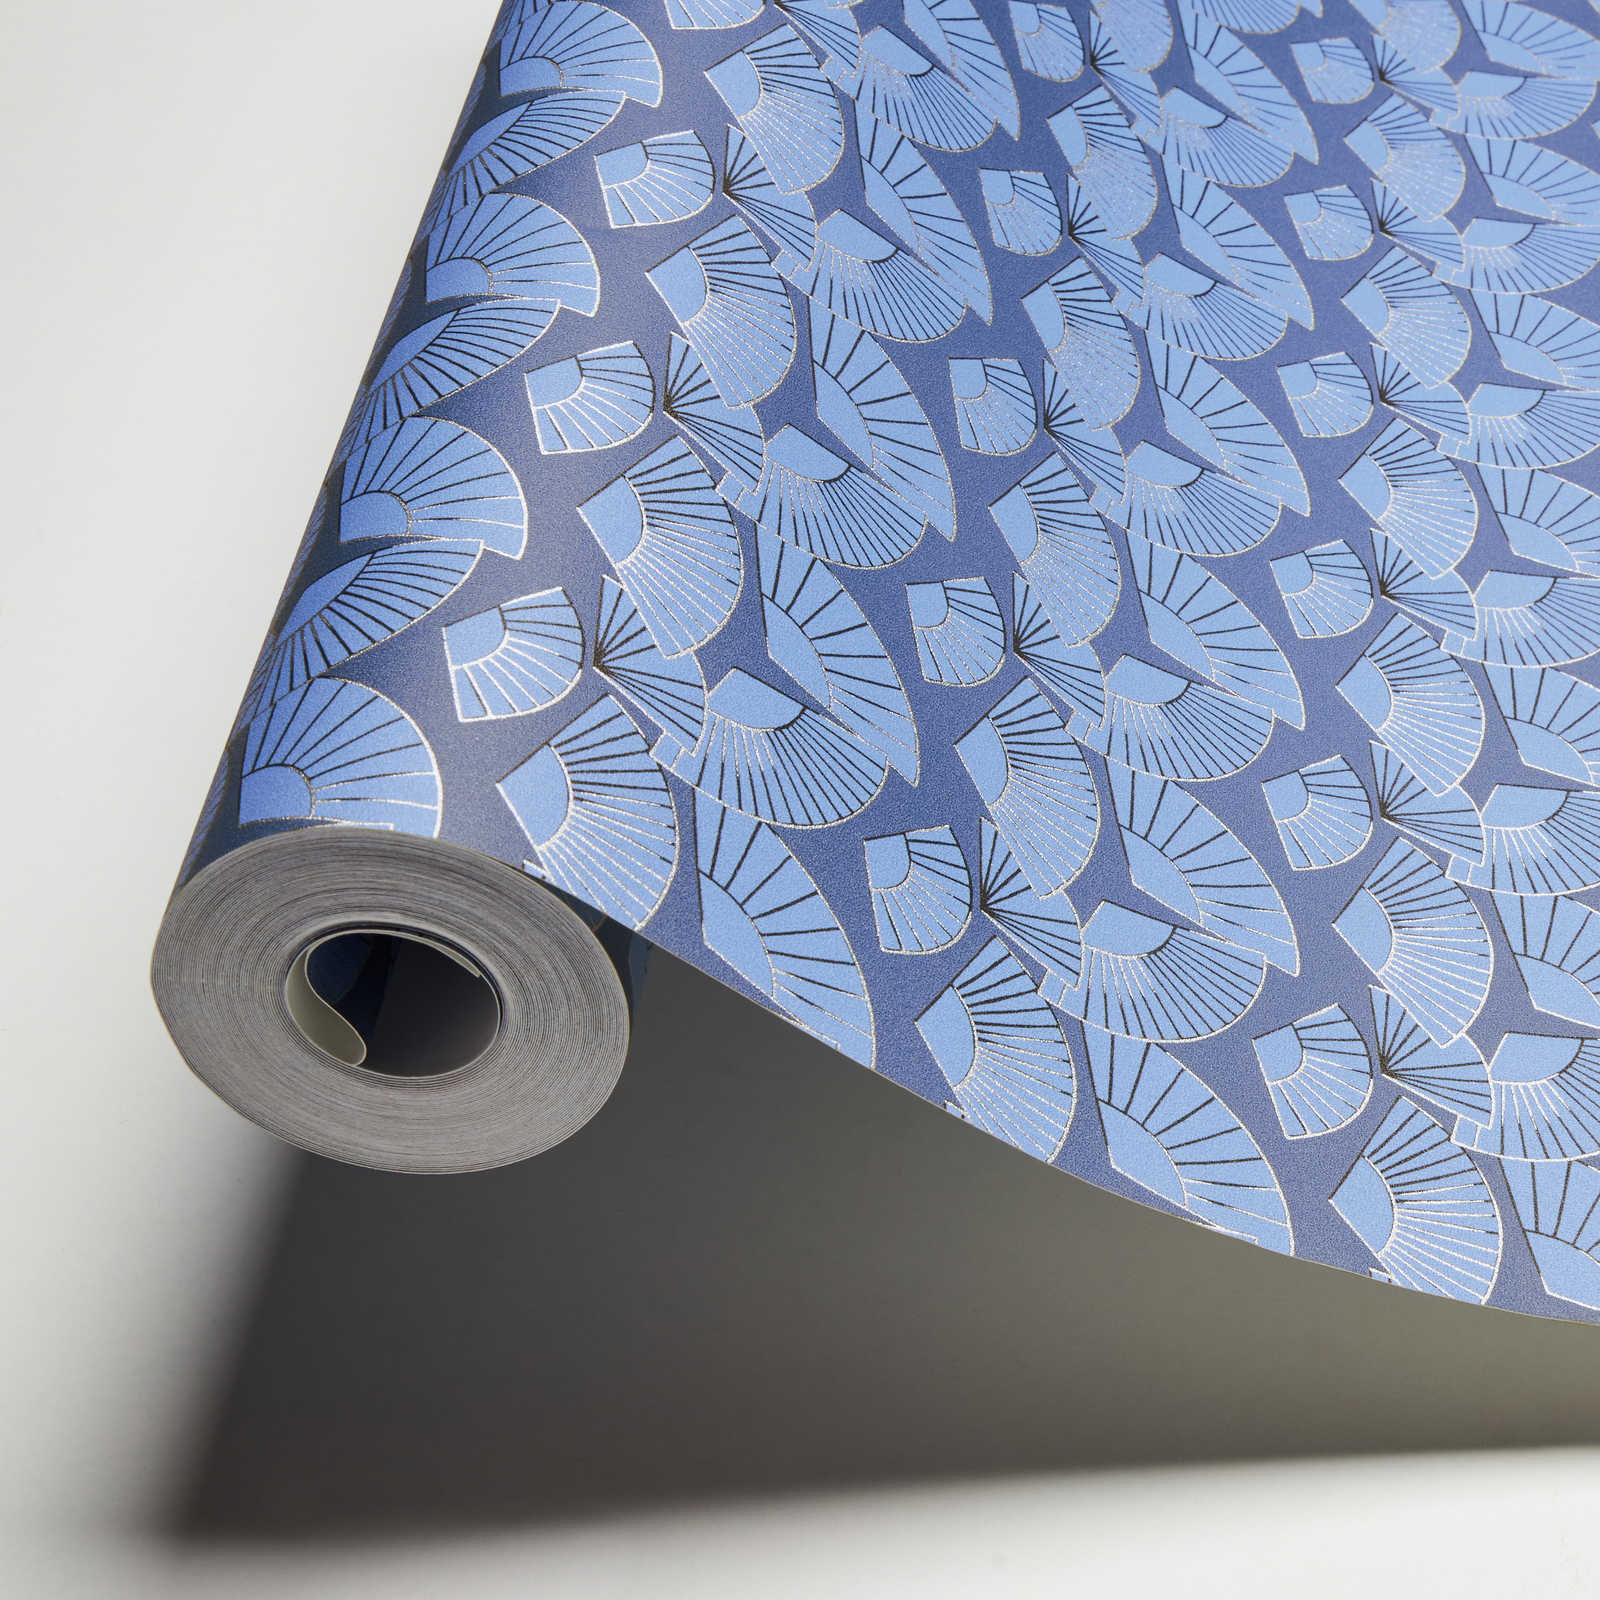             Karl LAGERFELD behangpapier waaier ontwerp - blauw, metallic
        